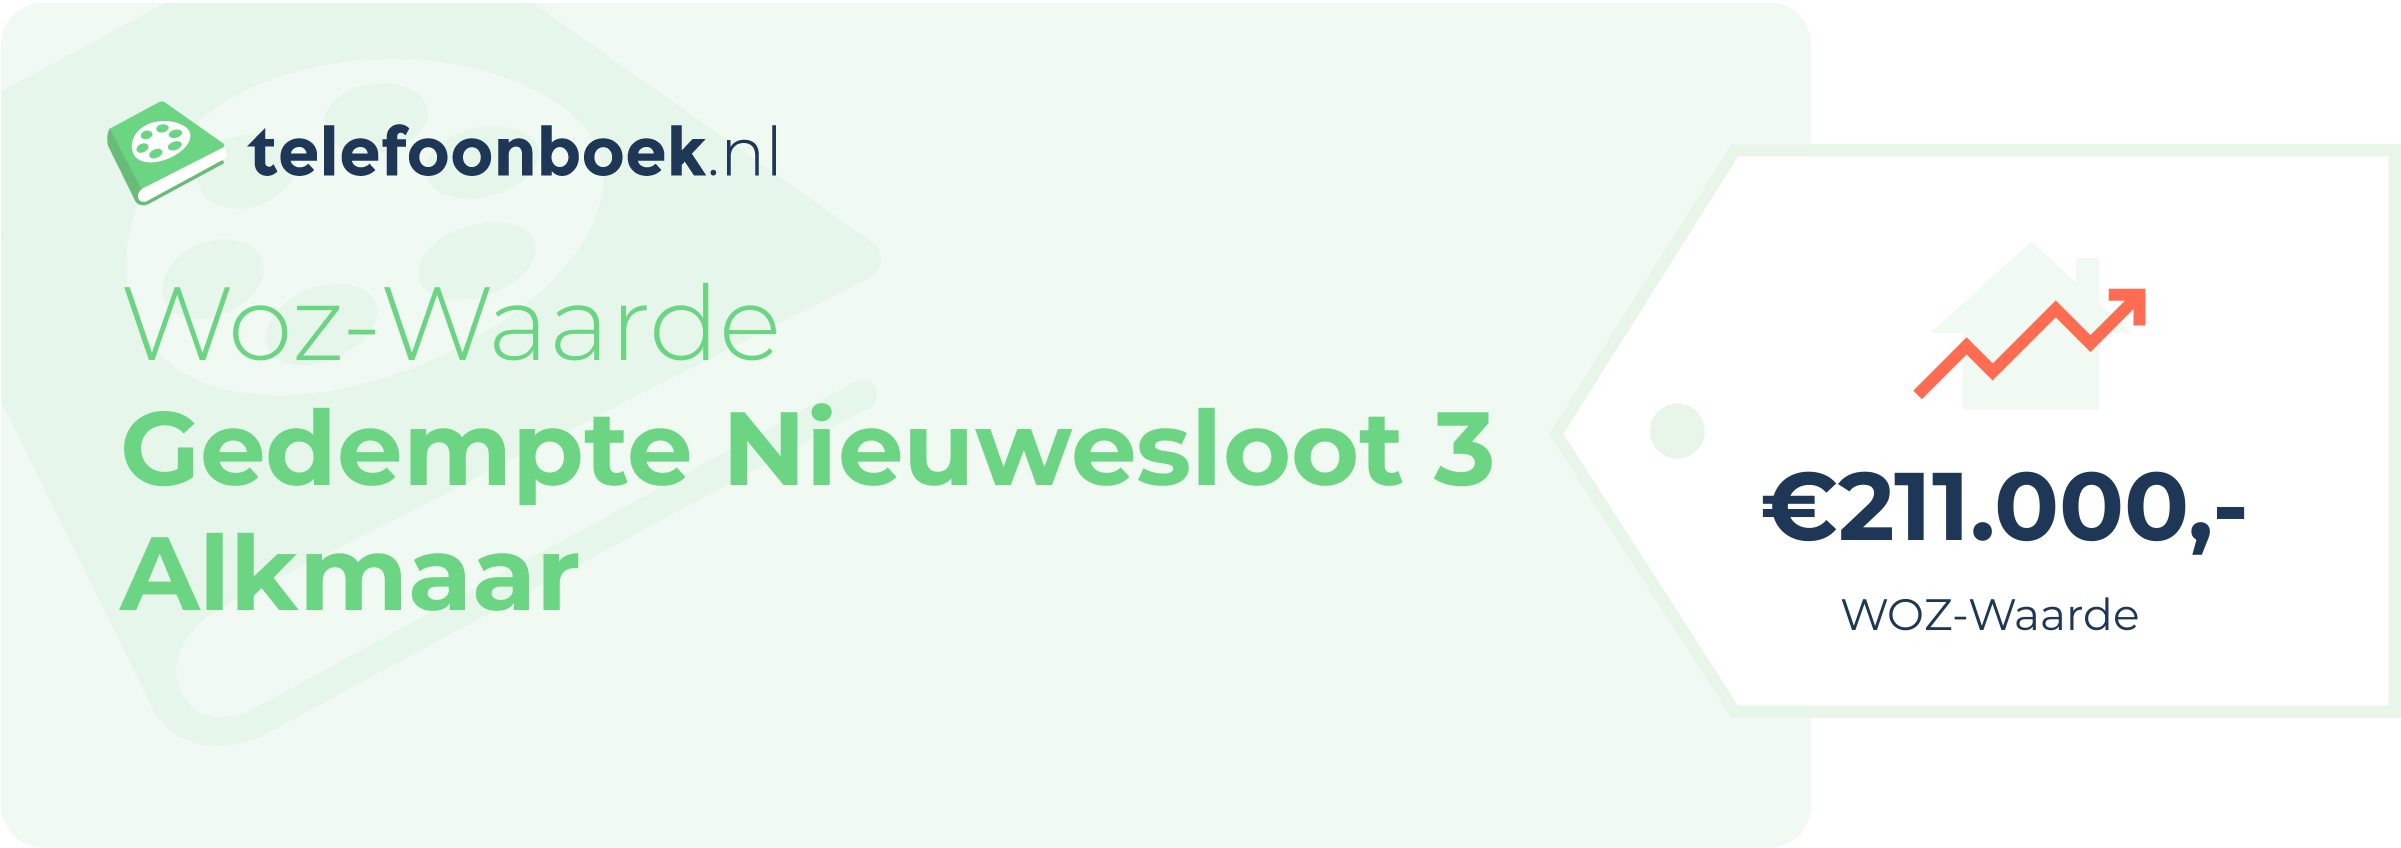 WOZ-waarde Gedempte Nieuwesloot 3 Alkmaar